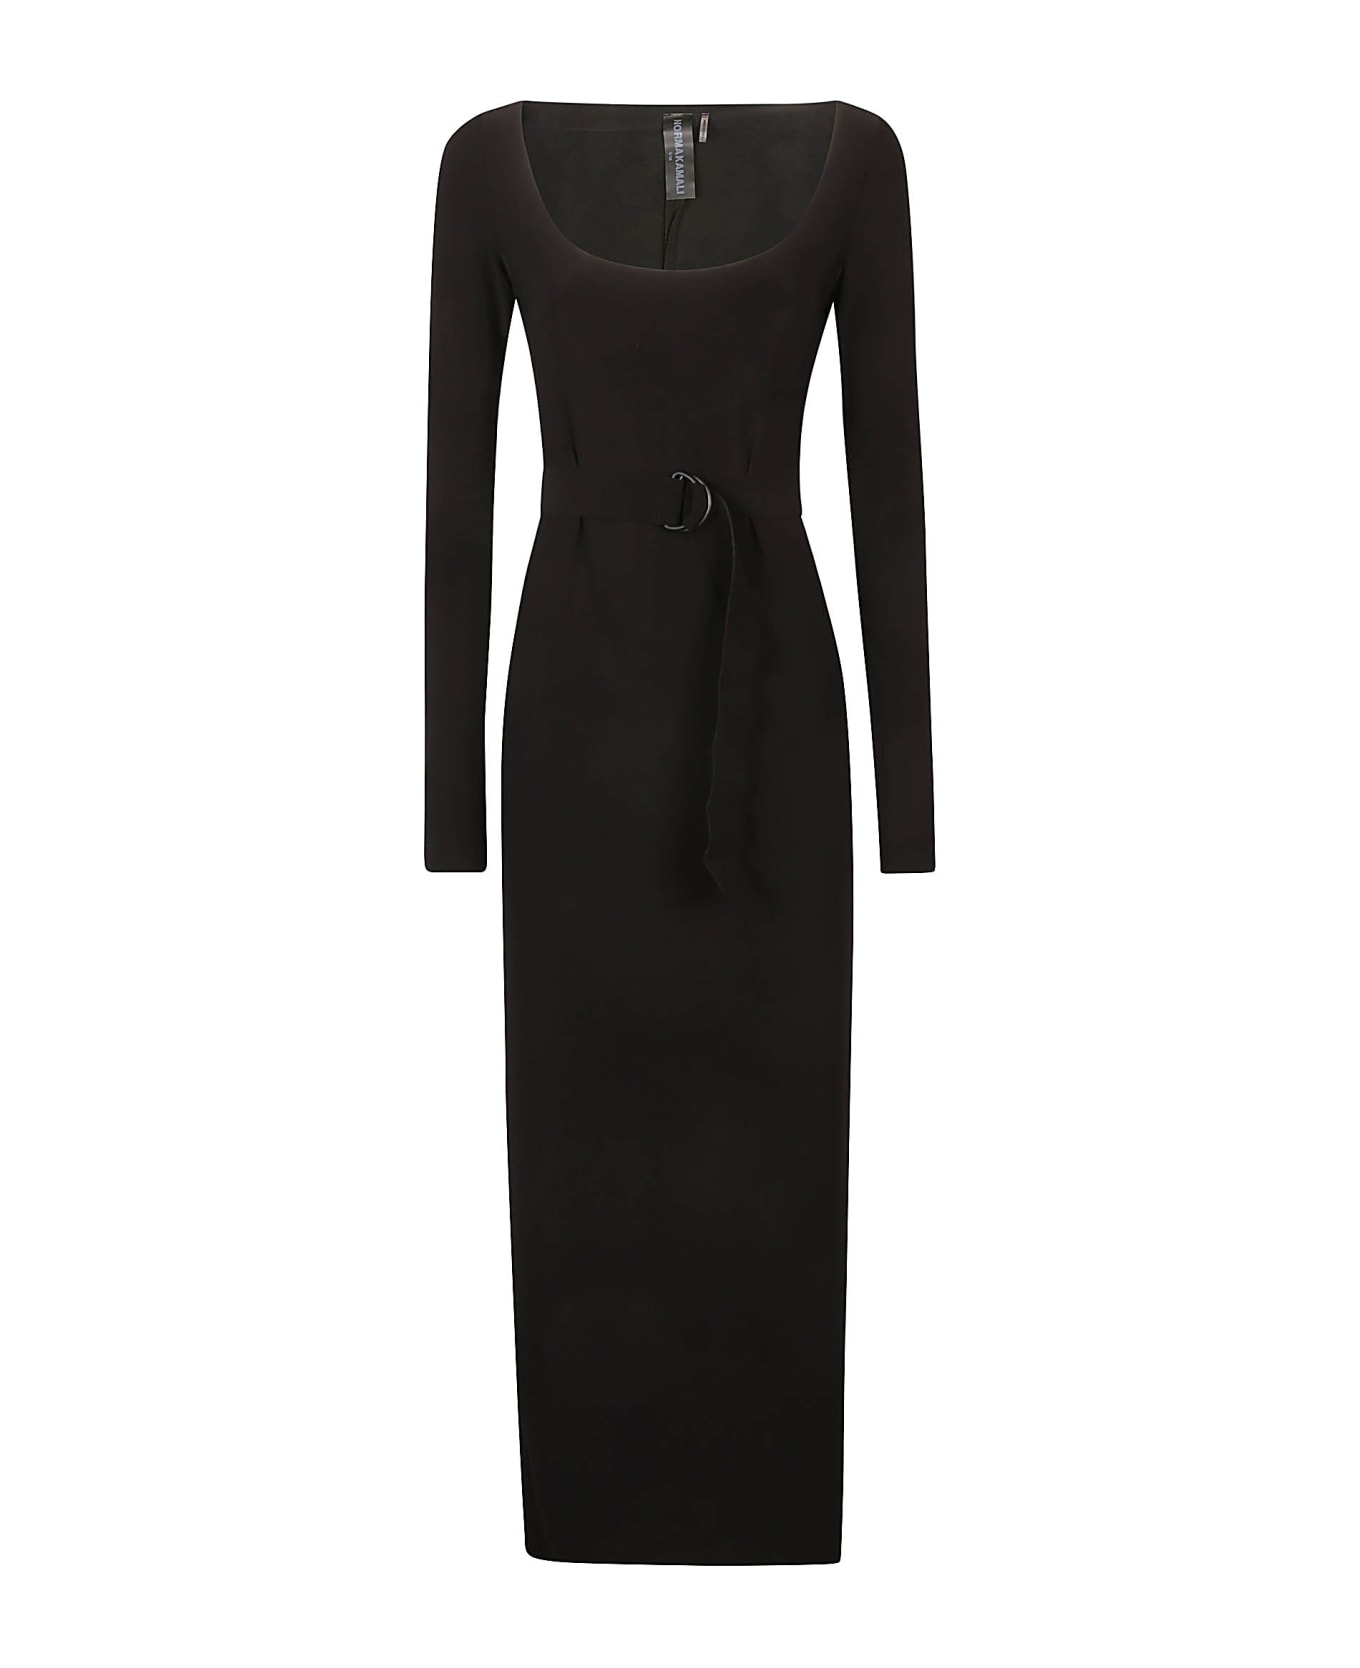 Norma Kamali Long Sleeve Side Slit Dress - Black